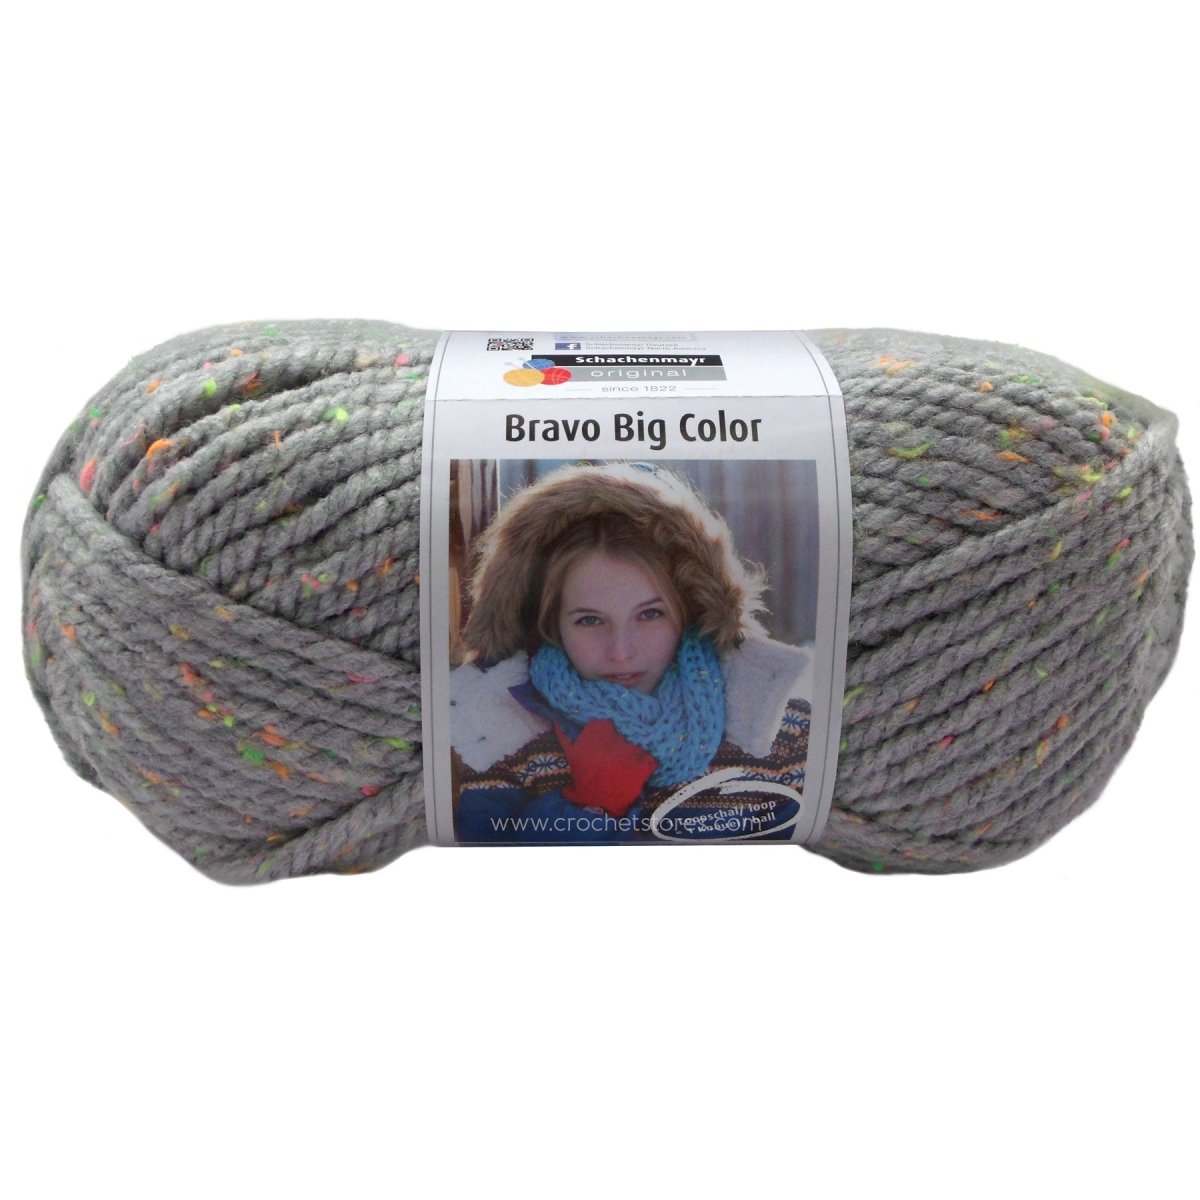 BRAVO BIG COLOR - Crochetstores9807720-3914053859056533